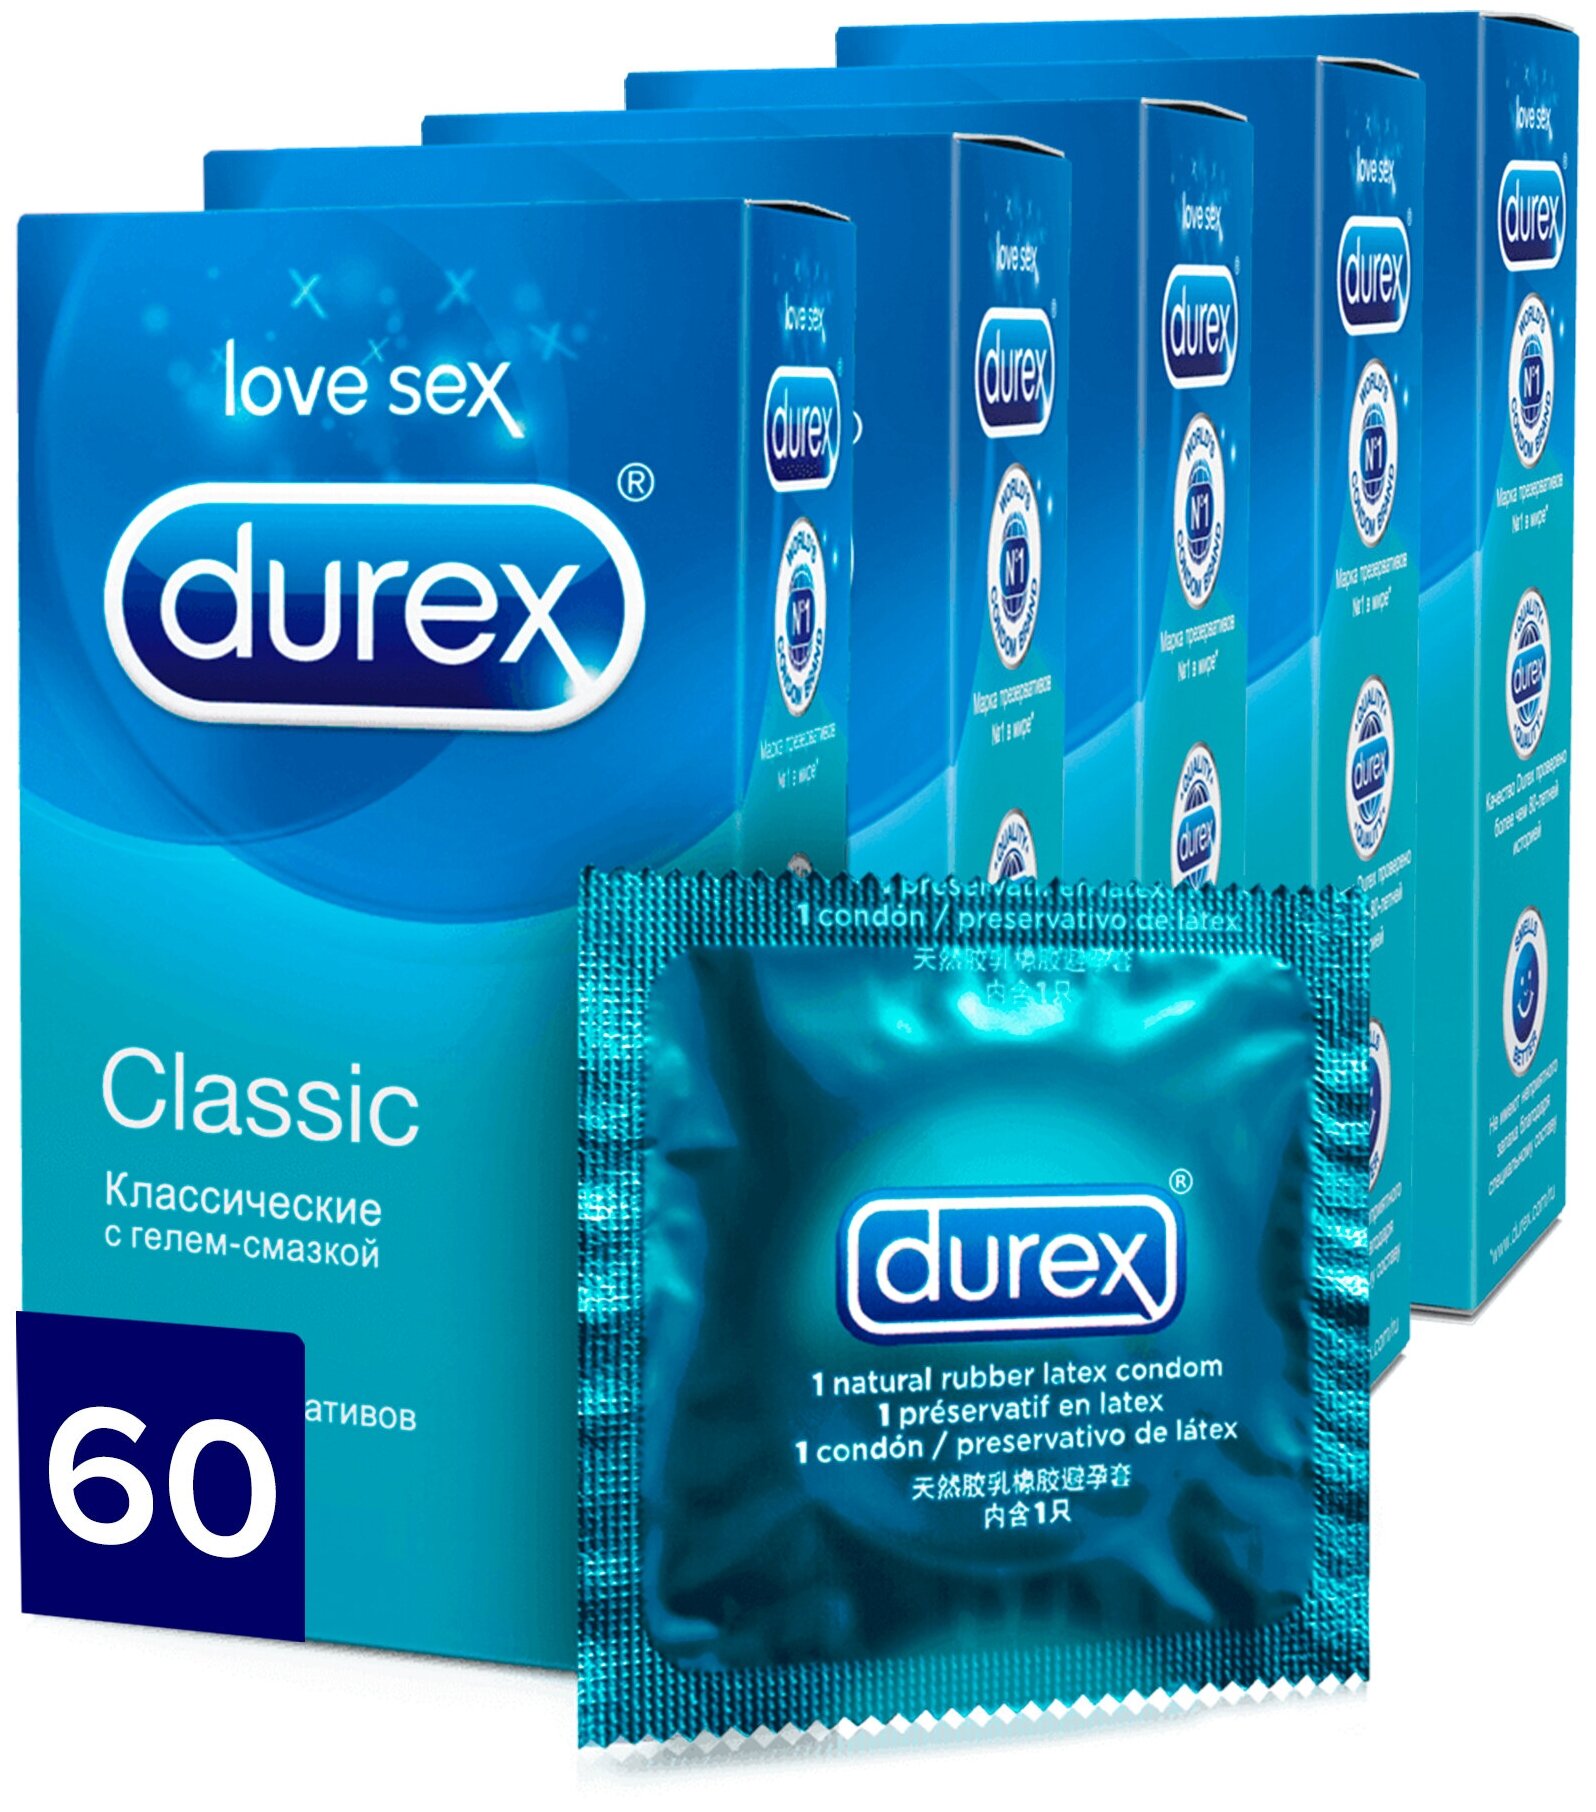 Презервативы Durex Intense Orgasmic 12 шт